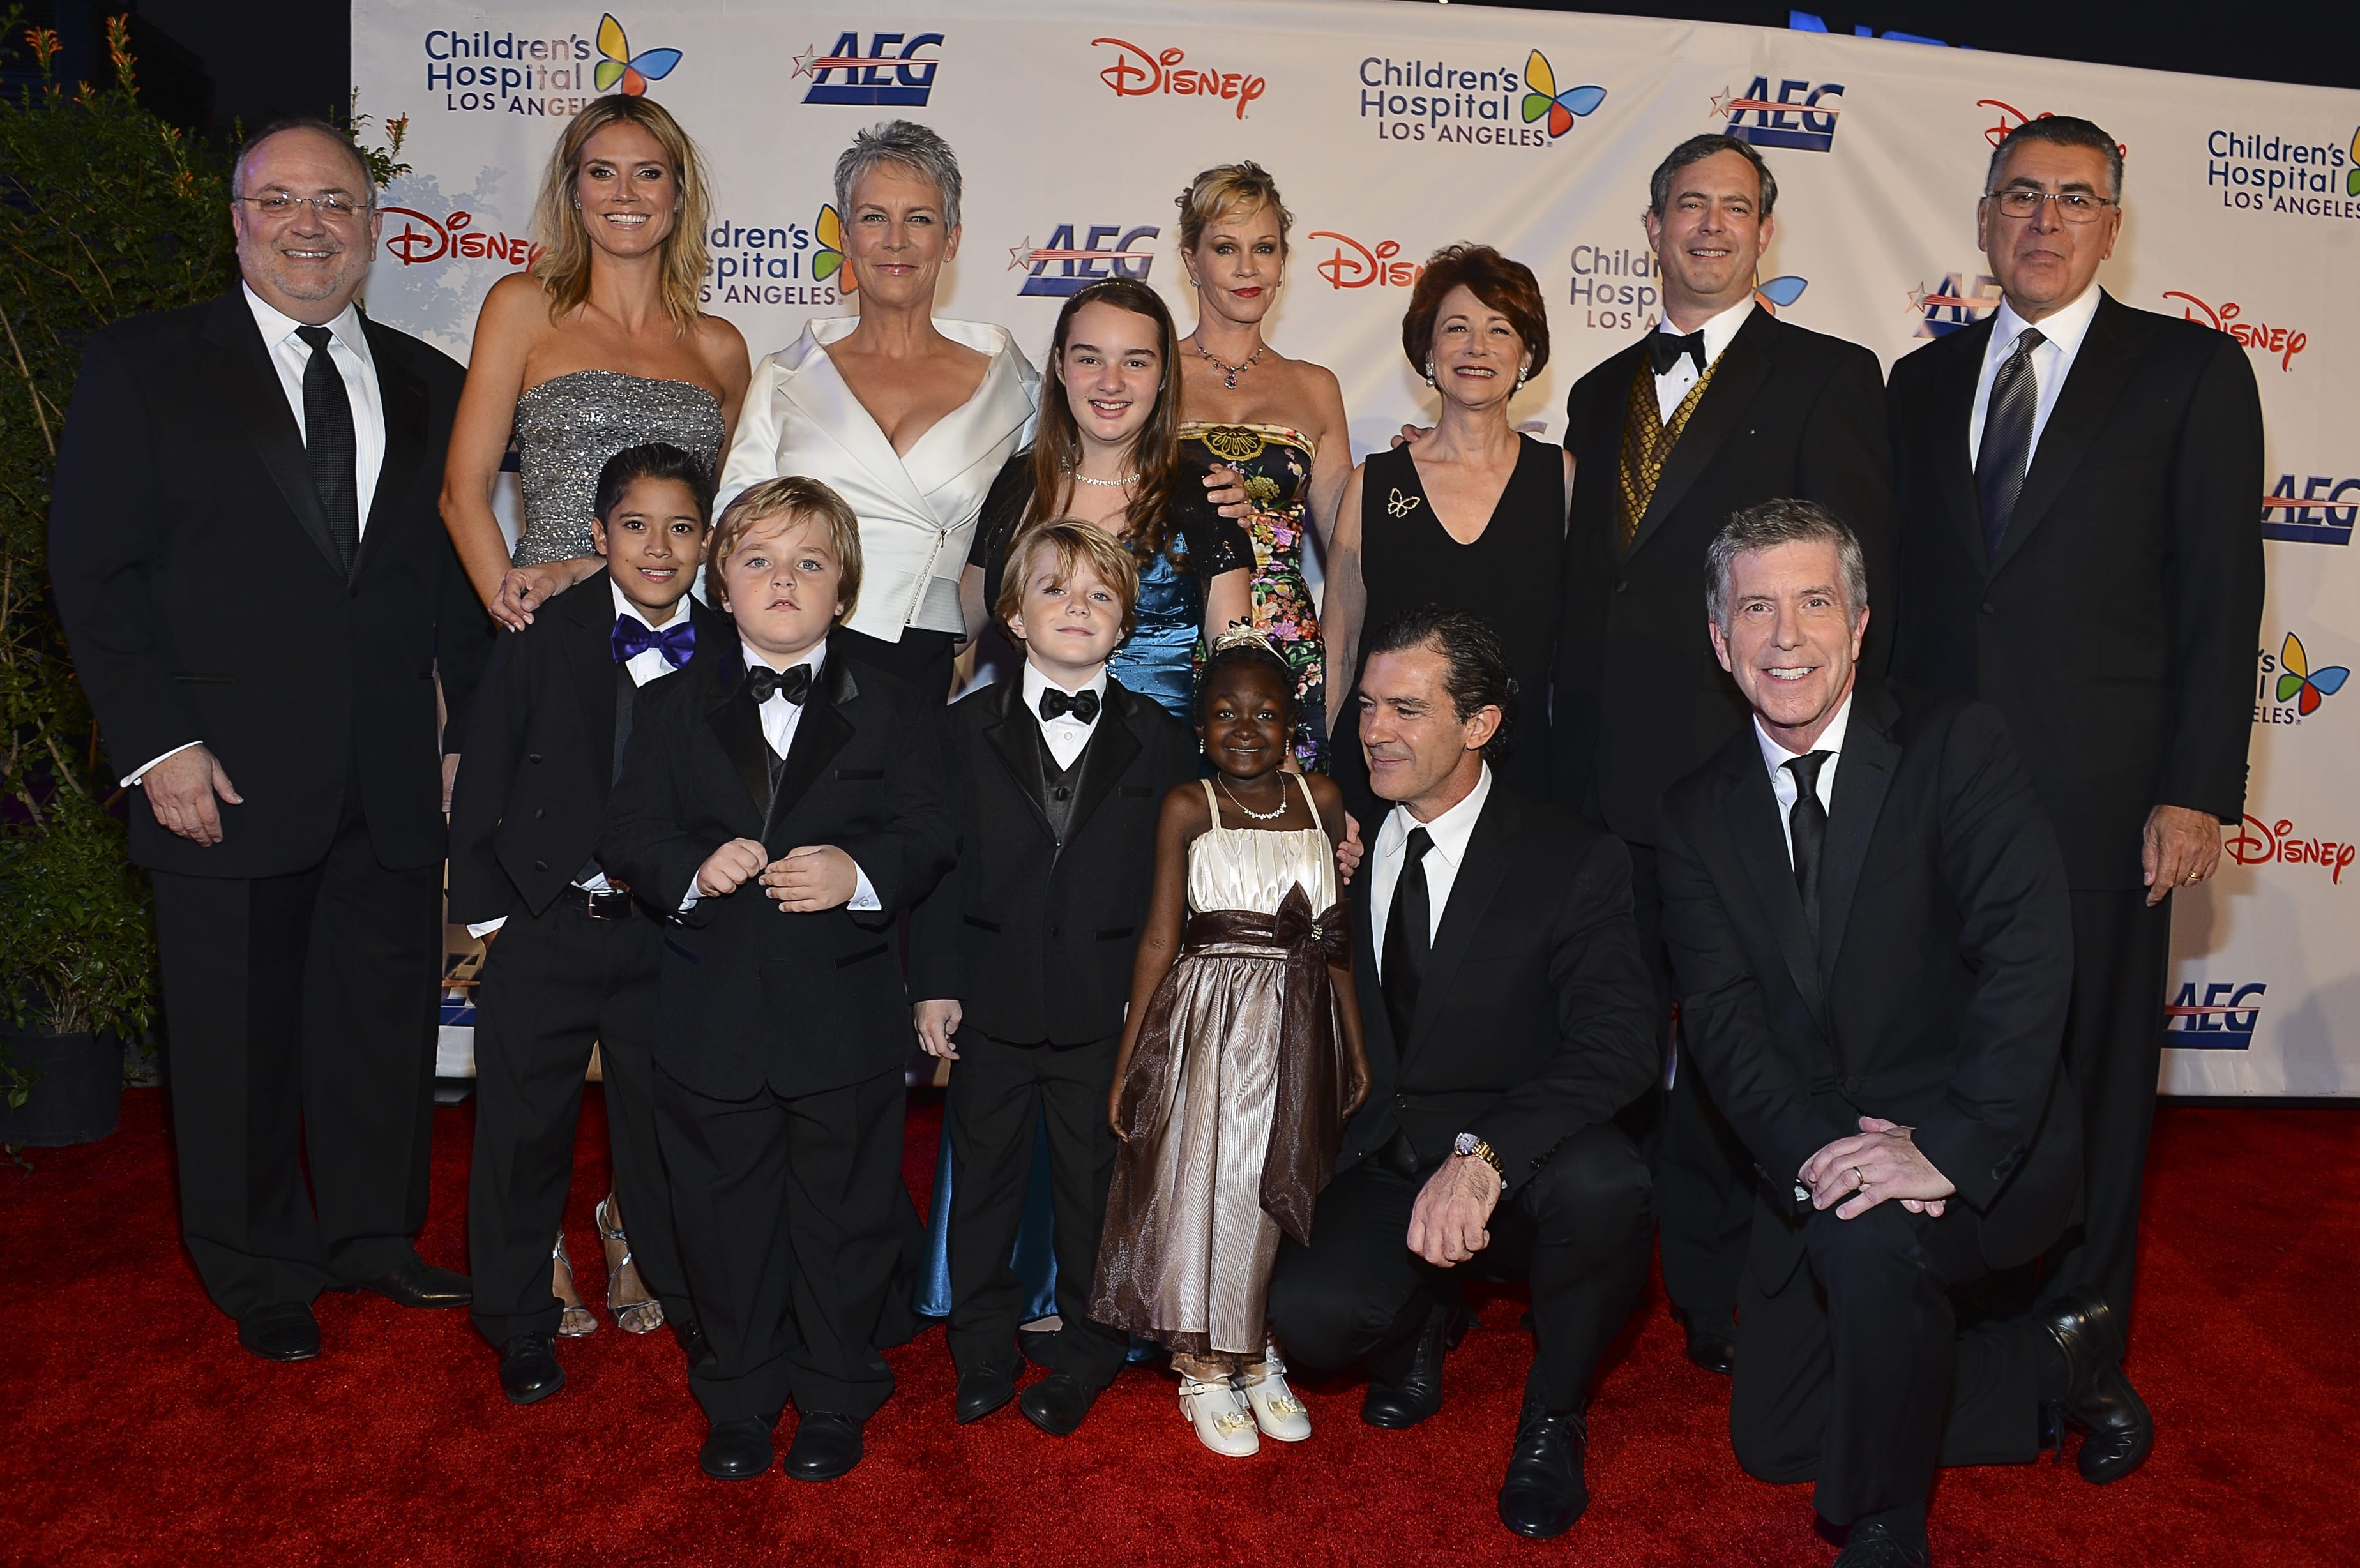 Children’s Hospital Los Angeles Gala: Noche de Niños Raises $2.6 Million | CHLA